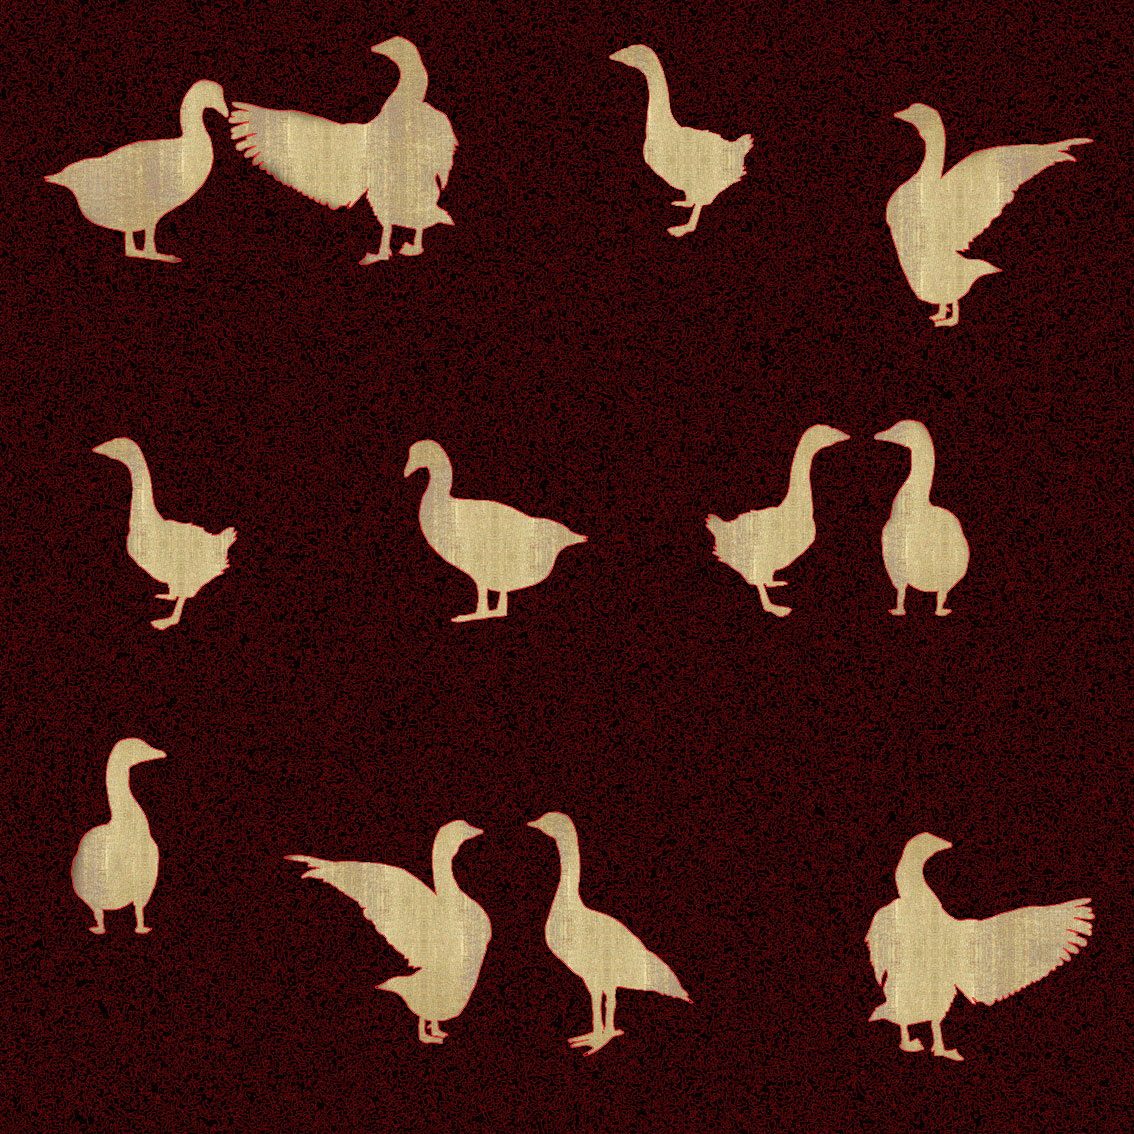 Golden-geese  Thierry Bisch artiste peintre contemporain animaux tableau art décoration biodiversité conservation 